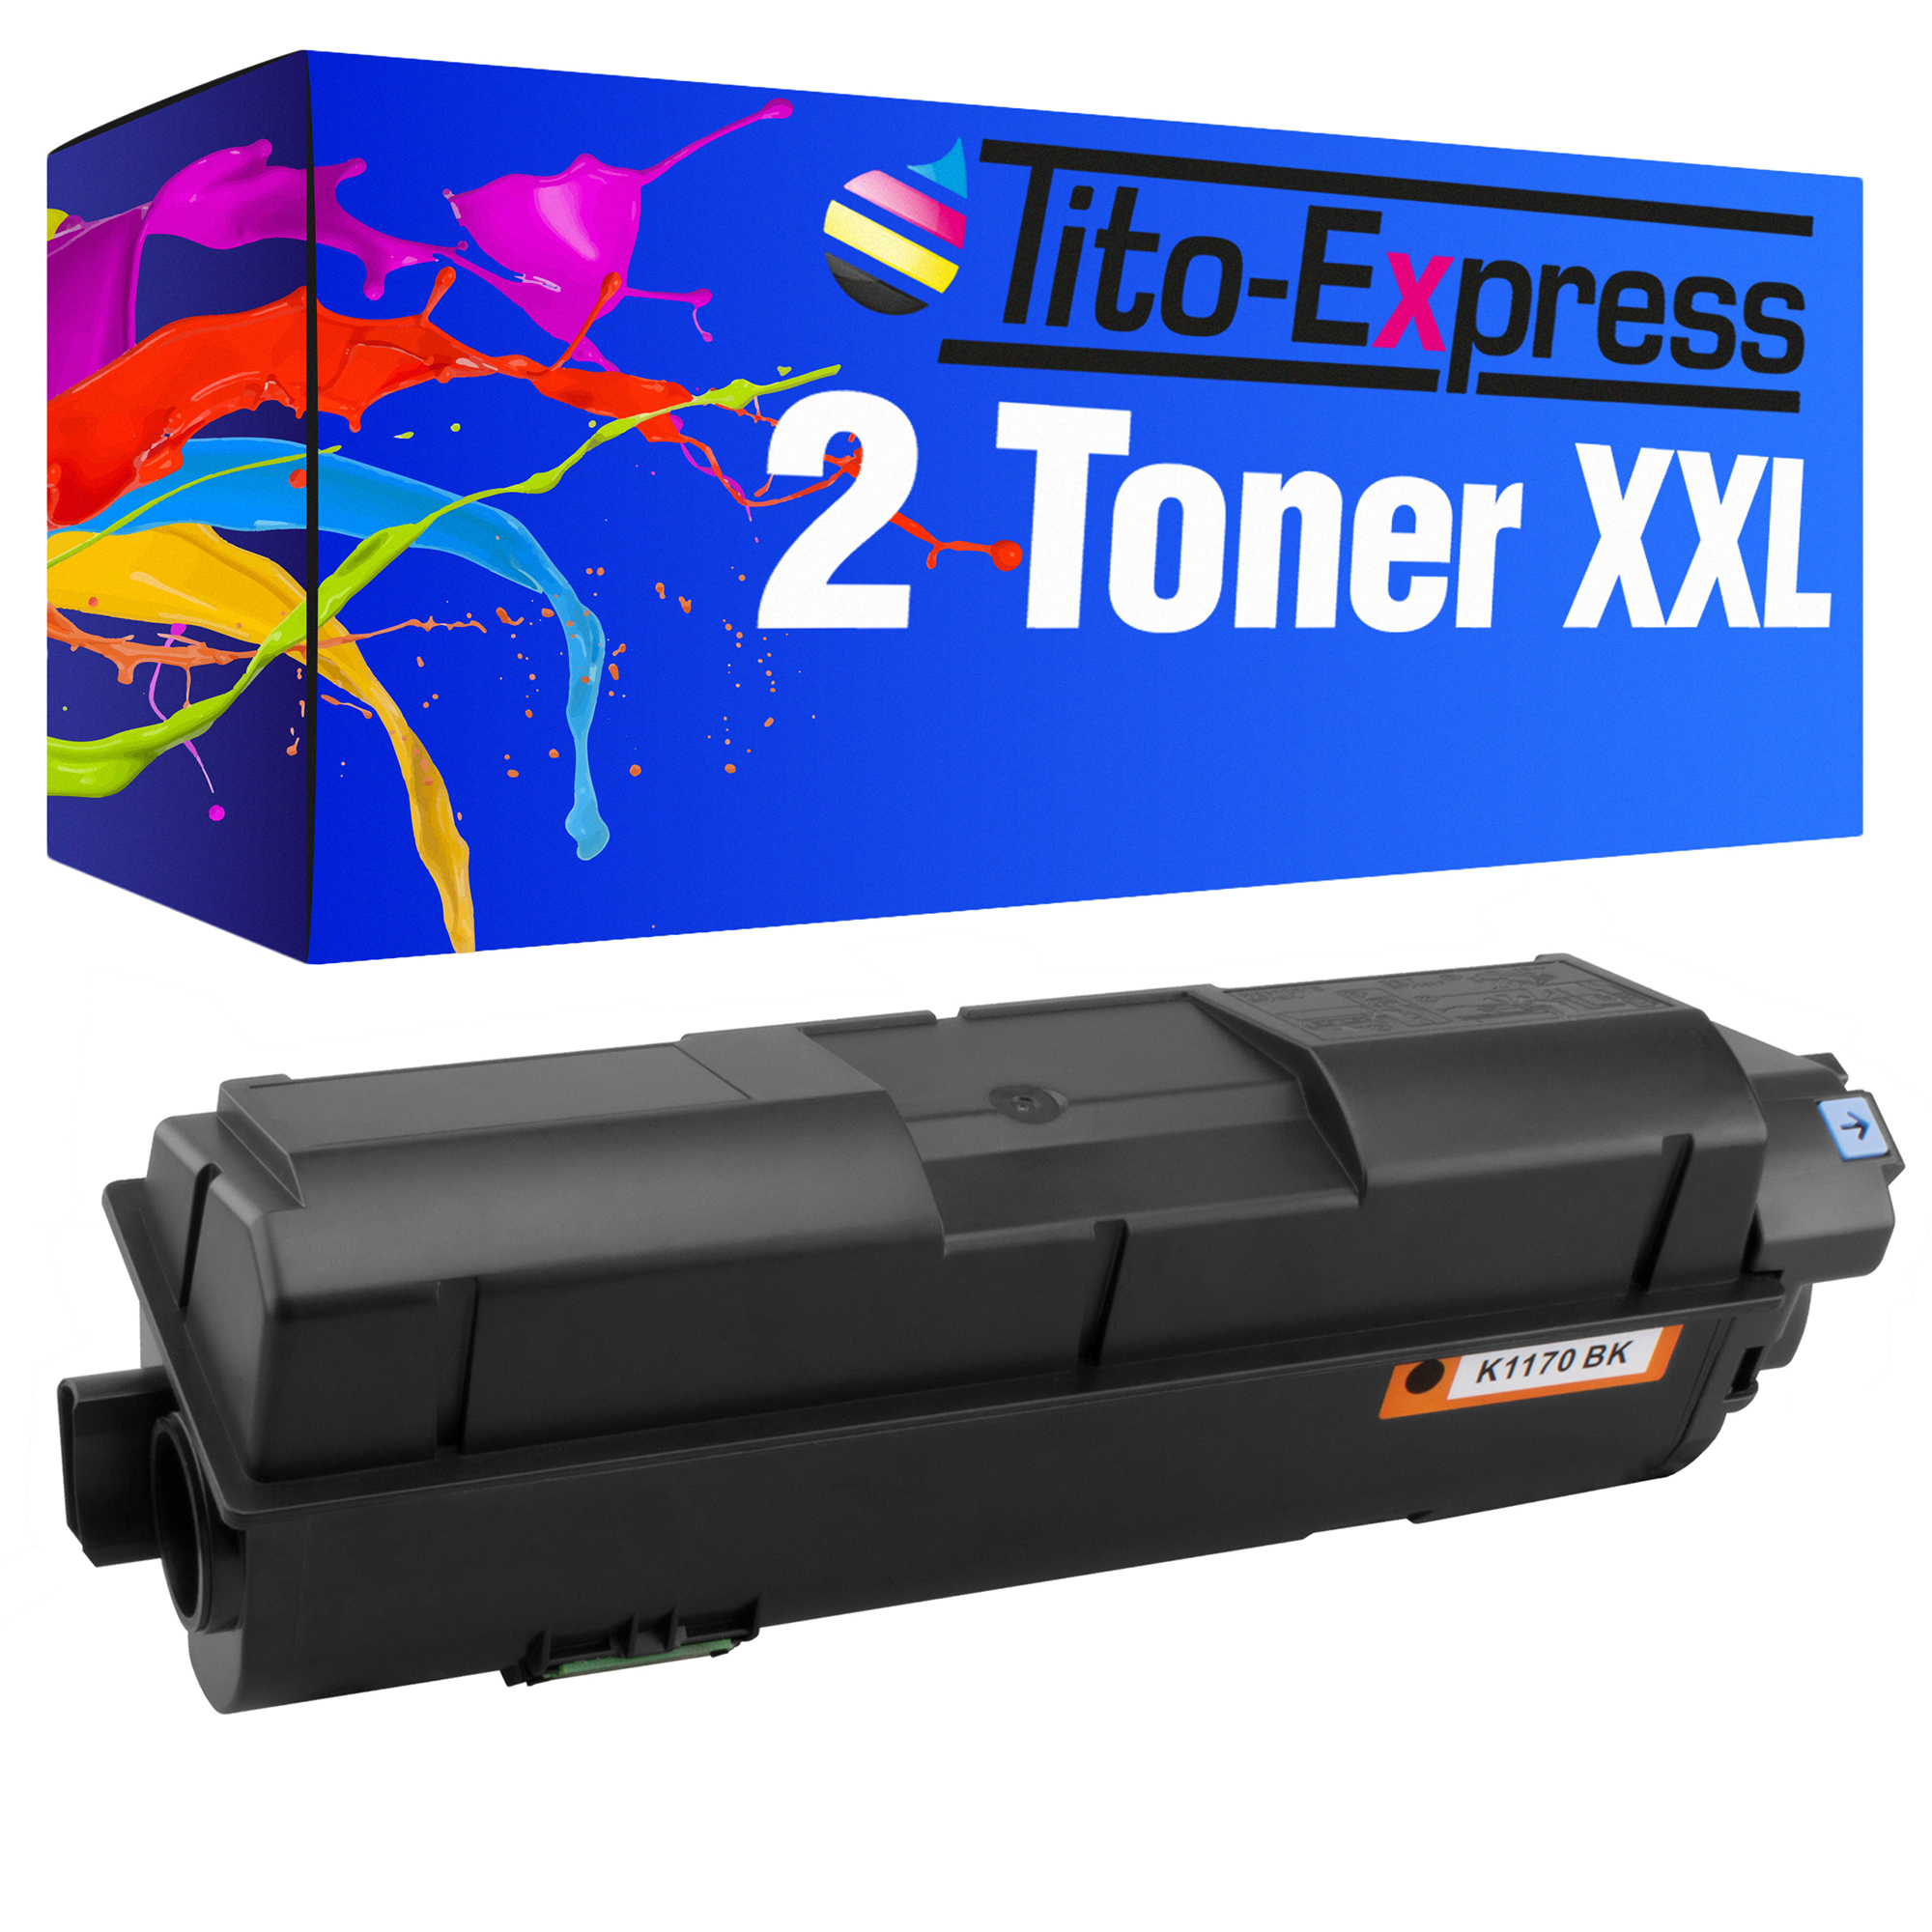 TITO-EXPRESS PLATINUMSERIE 2 Toner ersetzt TK-1170 black Kyocera (1T02S50NL0) Toner